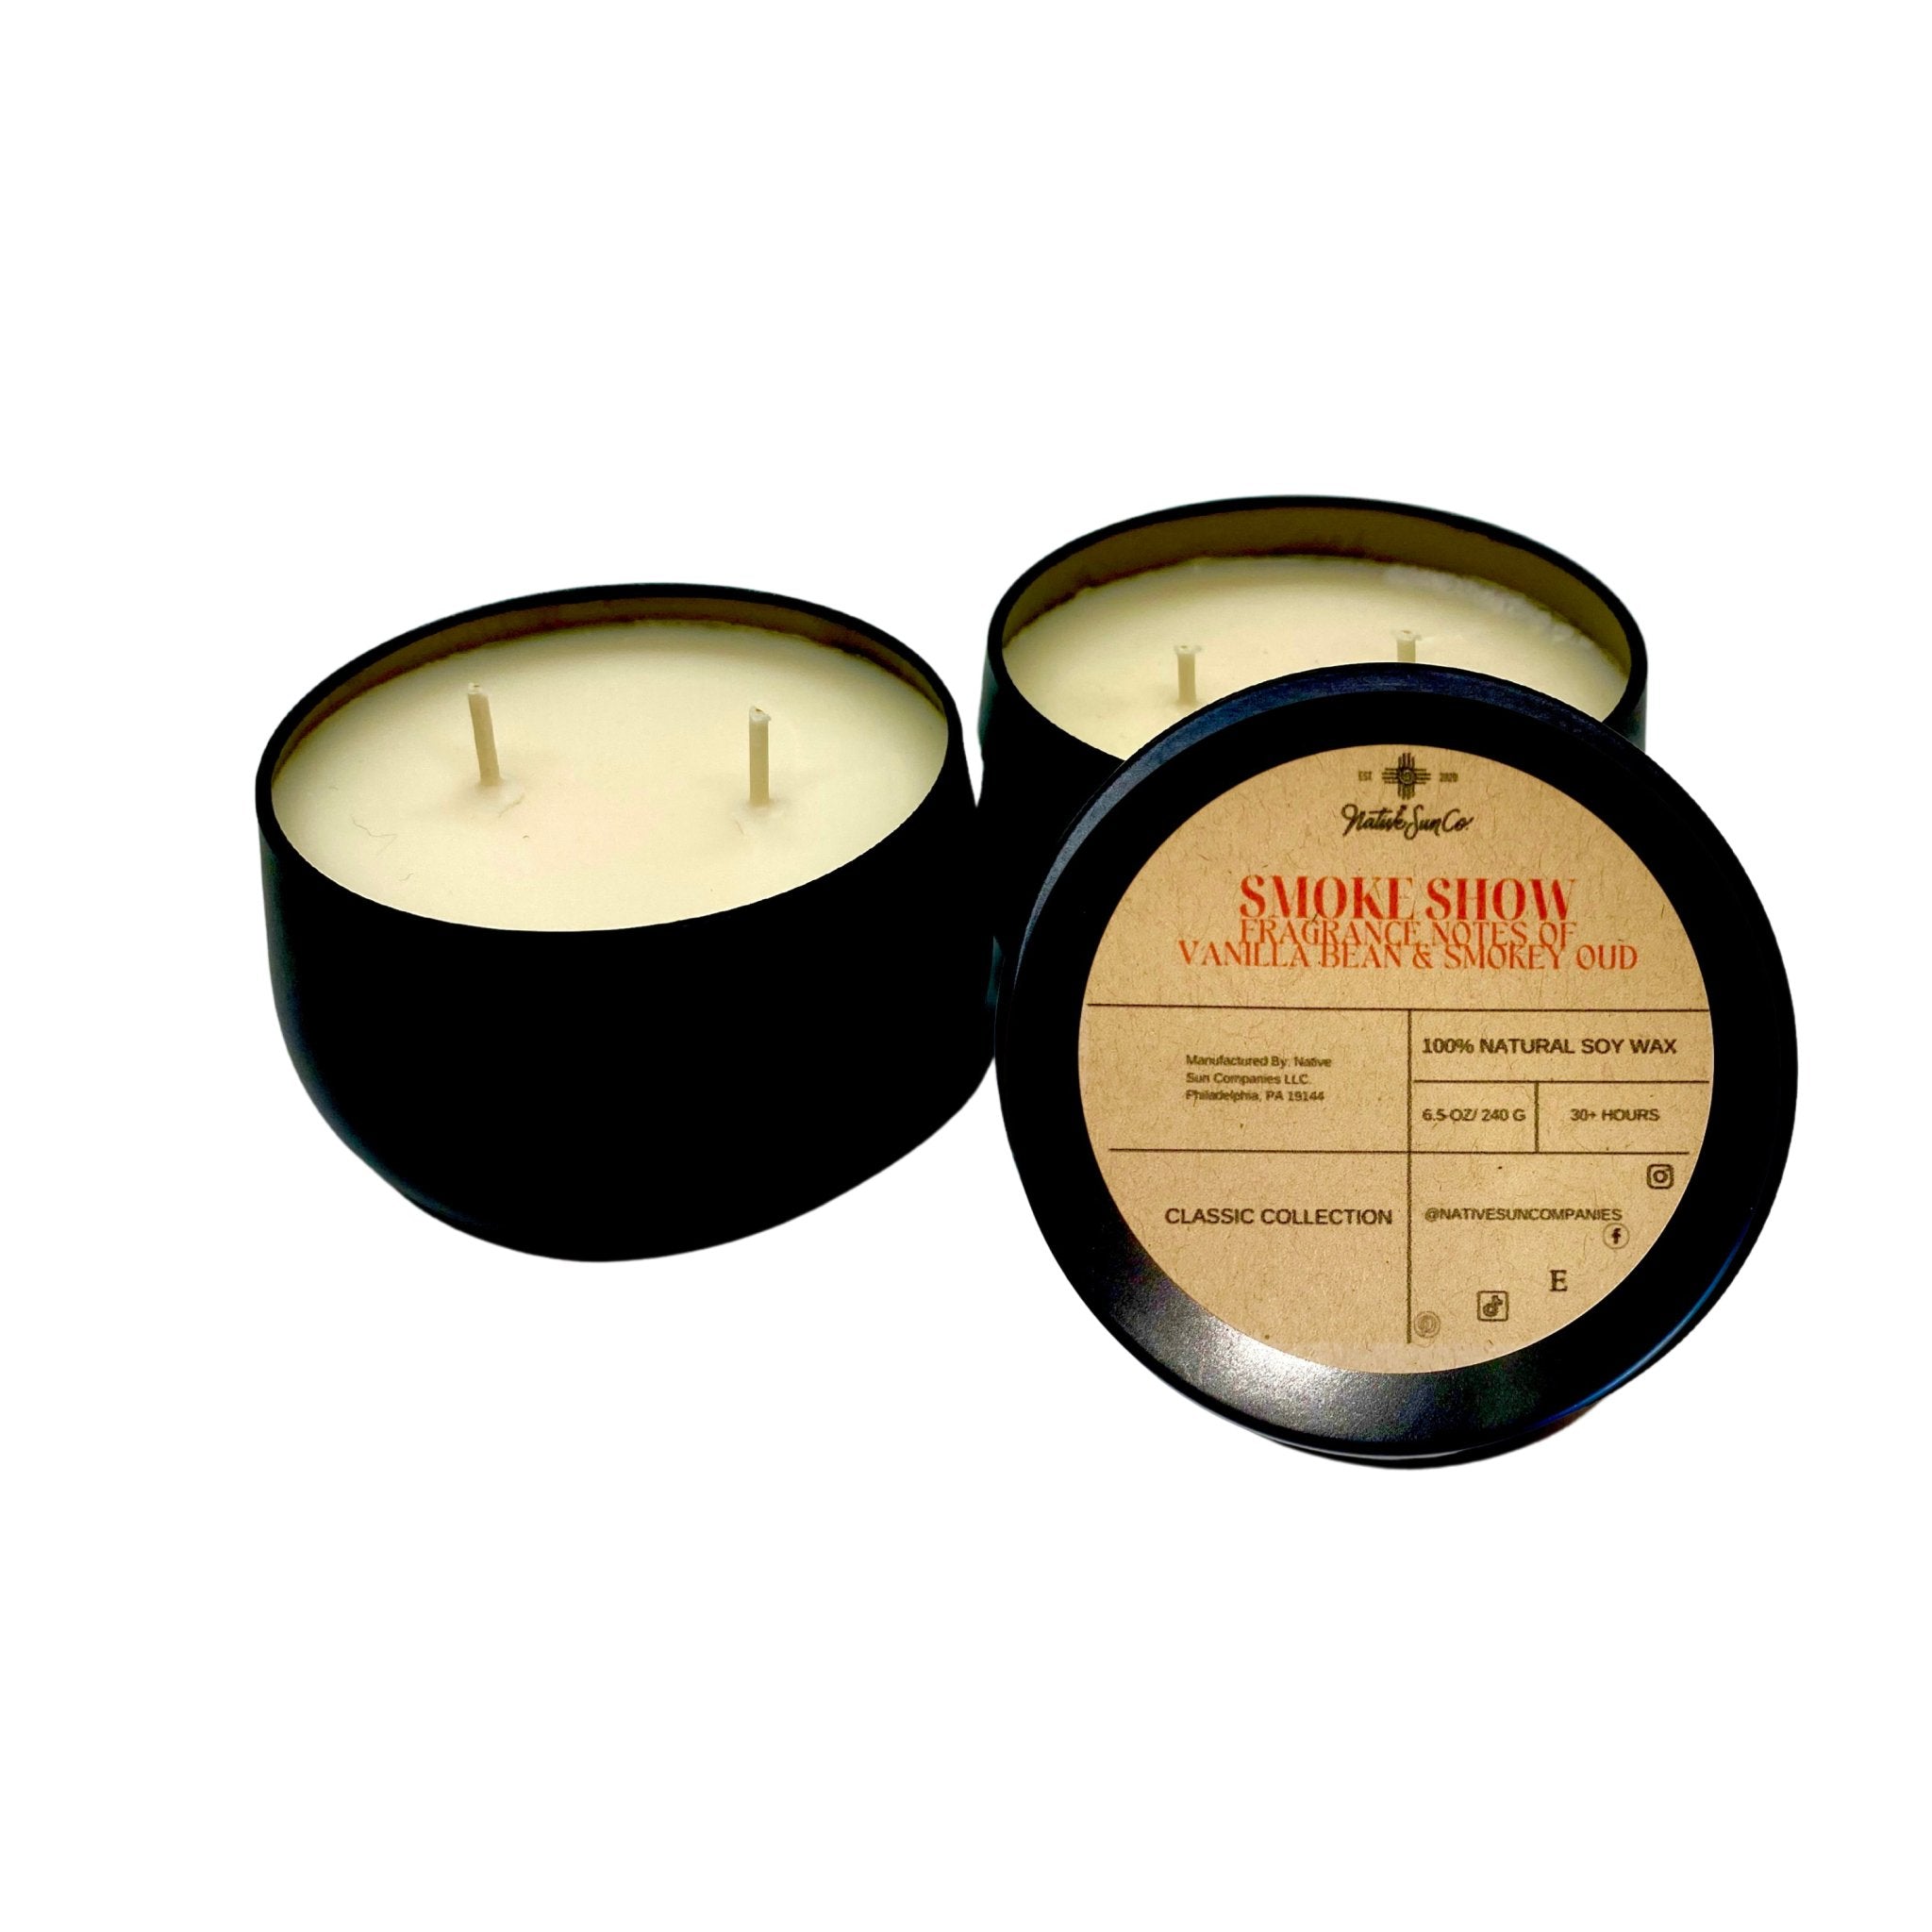 SMOKE SHOW (VANILLA BEAN + SMOKED OUD CANDLE) - Native Sun Companies -Candles